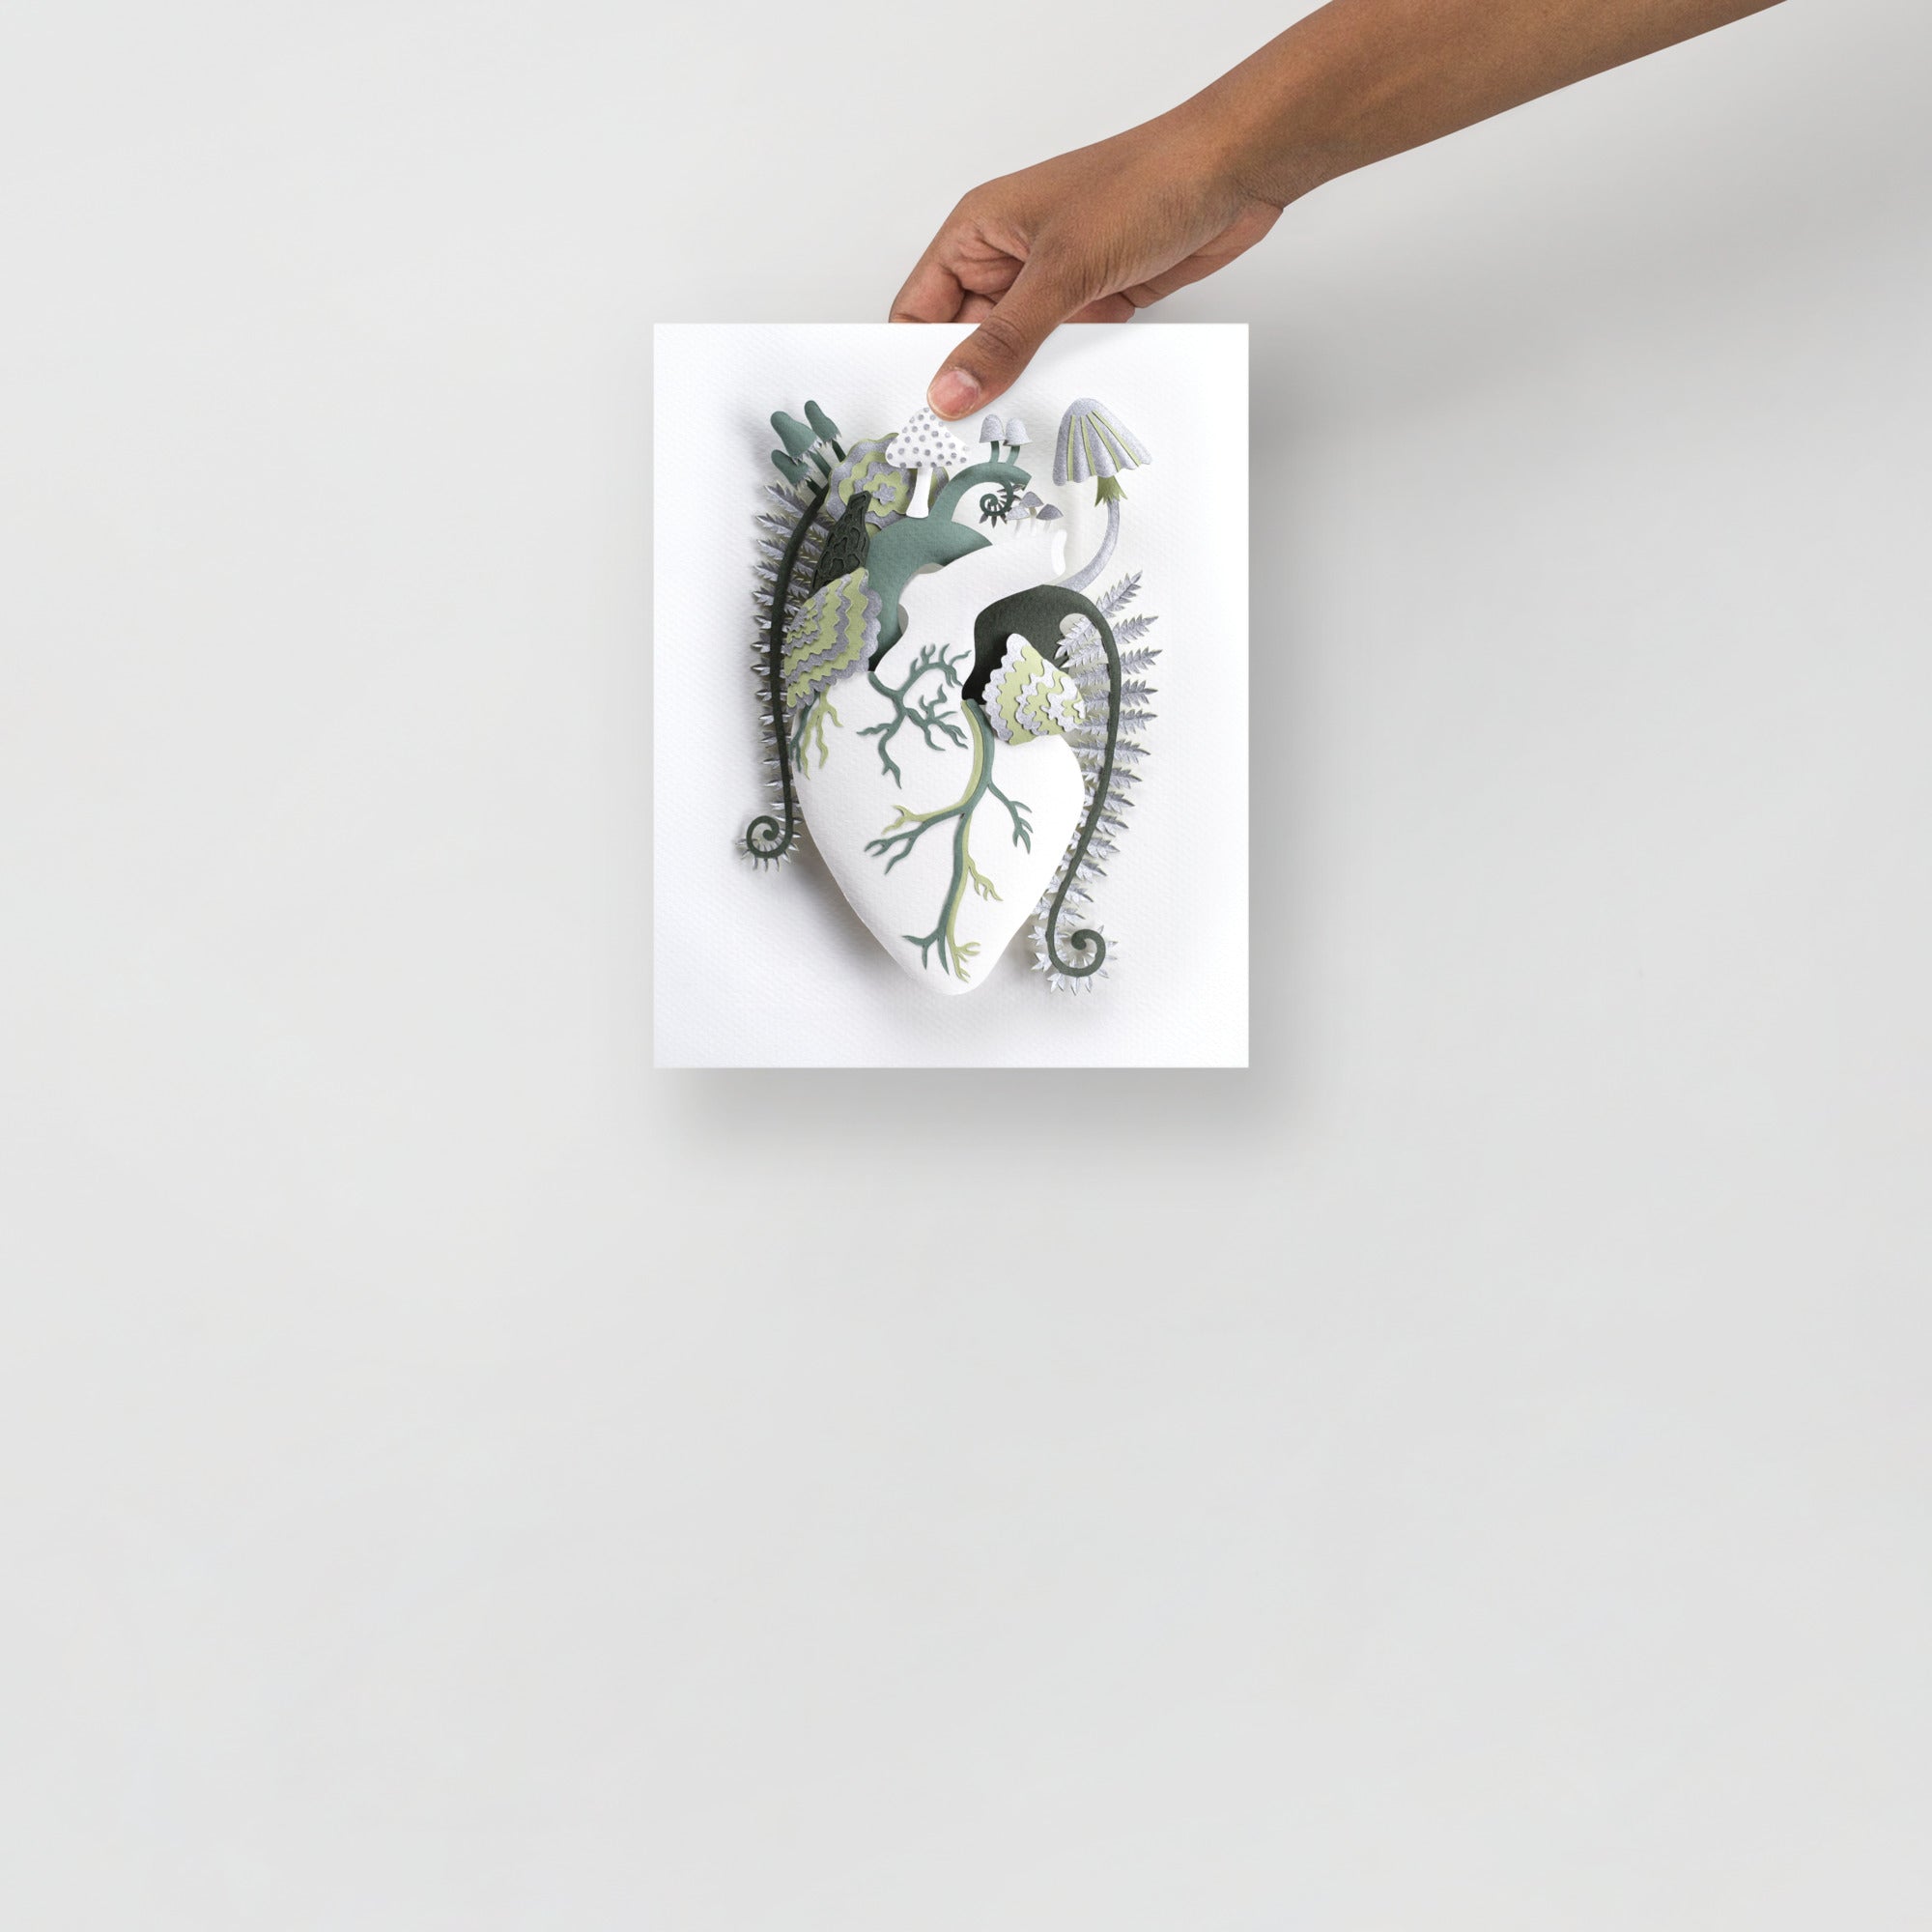 Healing Heart: Mushroom Forest 8" x 10" print